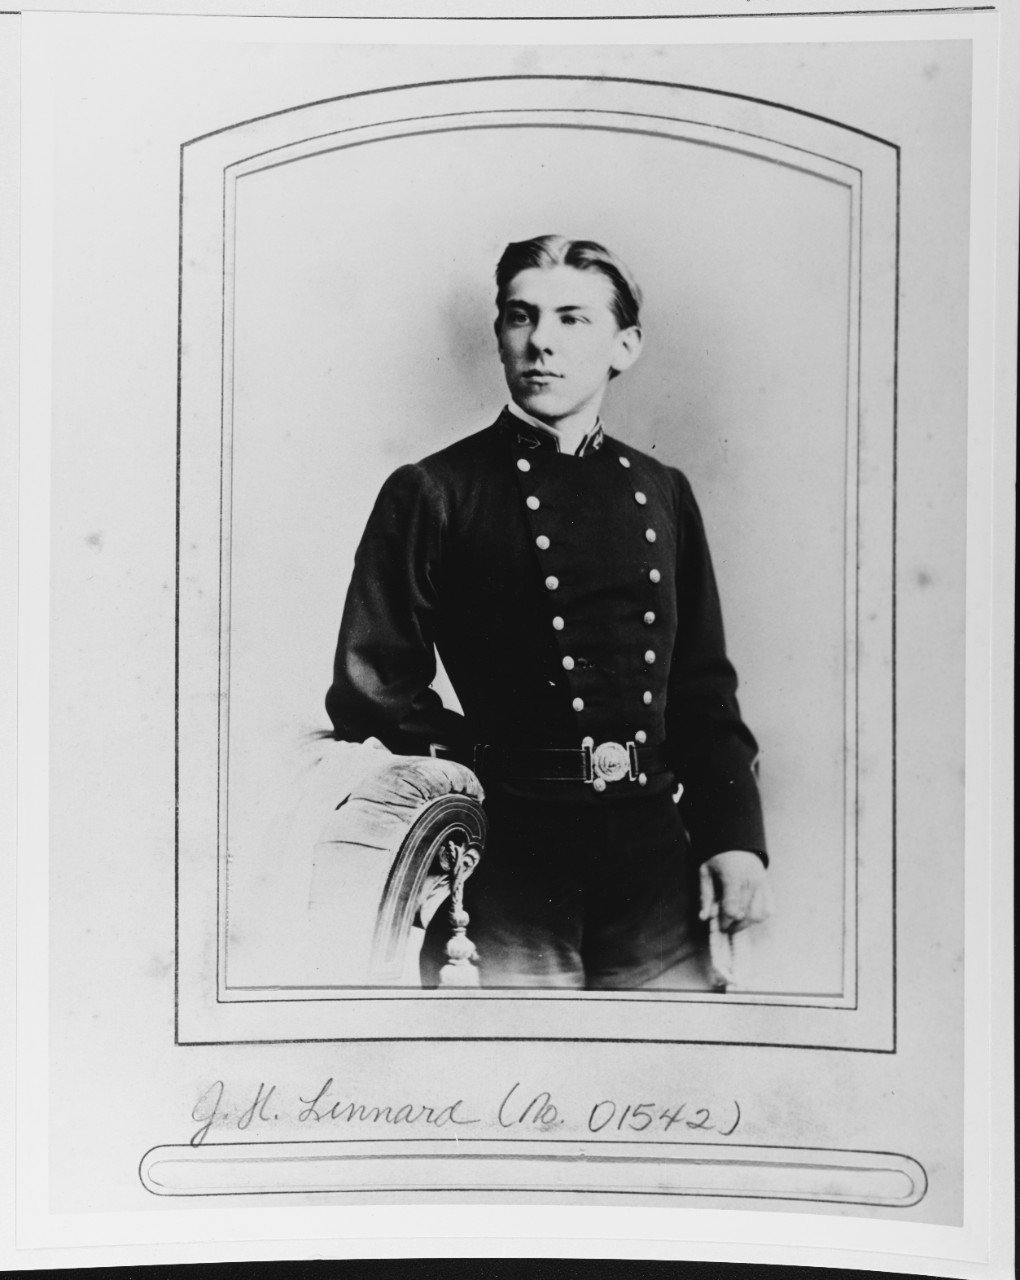 Captain Joseph Hamilton Linnard, USN